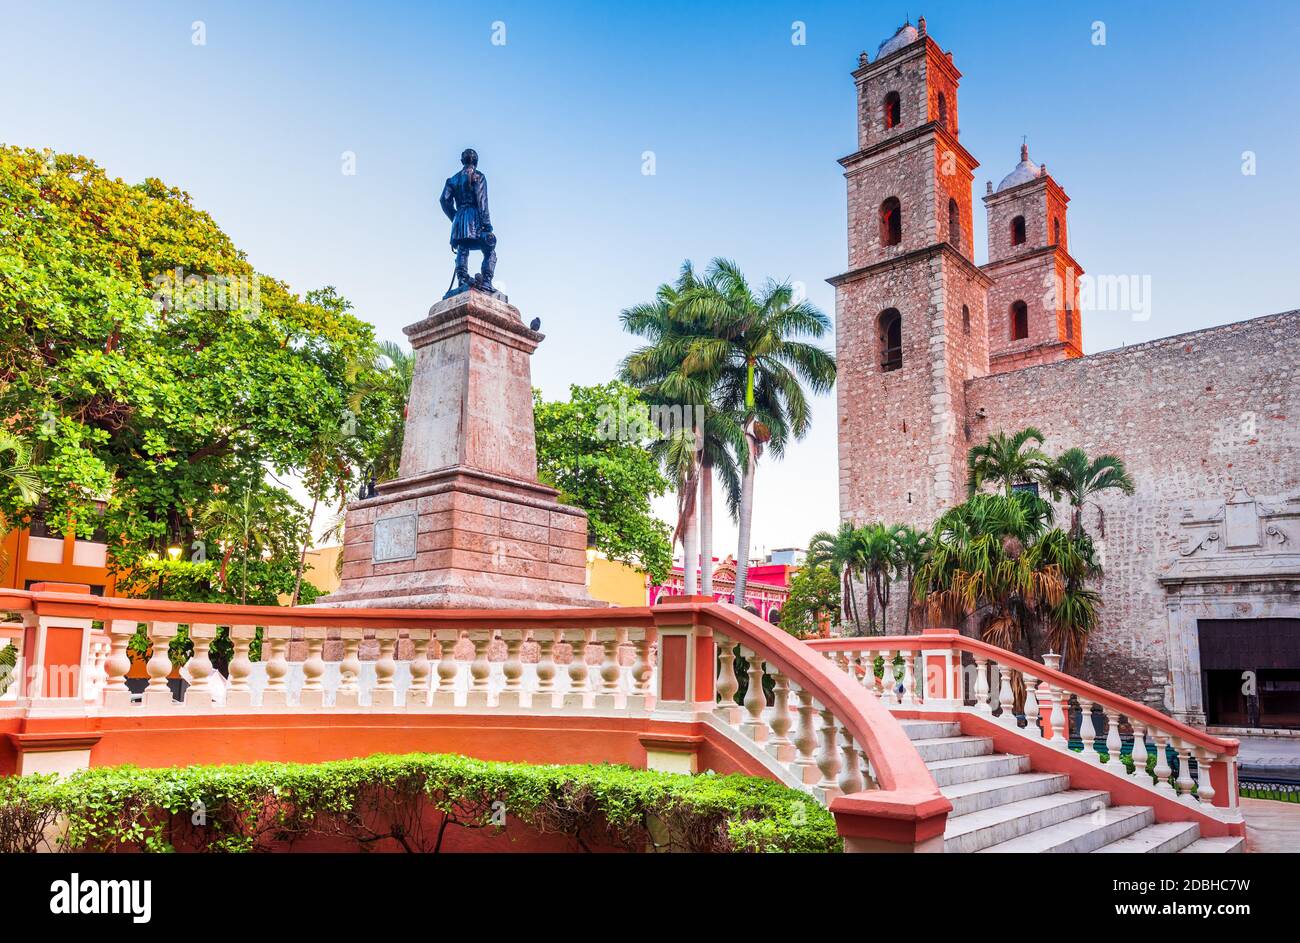 Merida Mexico Hispanic Colonial Plaza And Church In Parque Hidalgo Yucatan Peninsula 9189